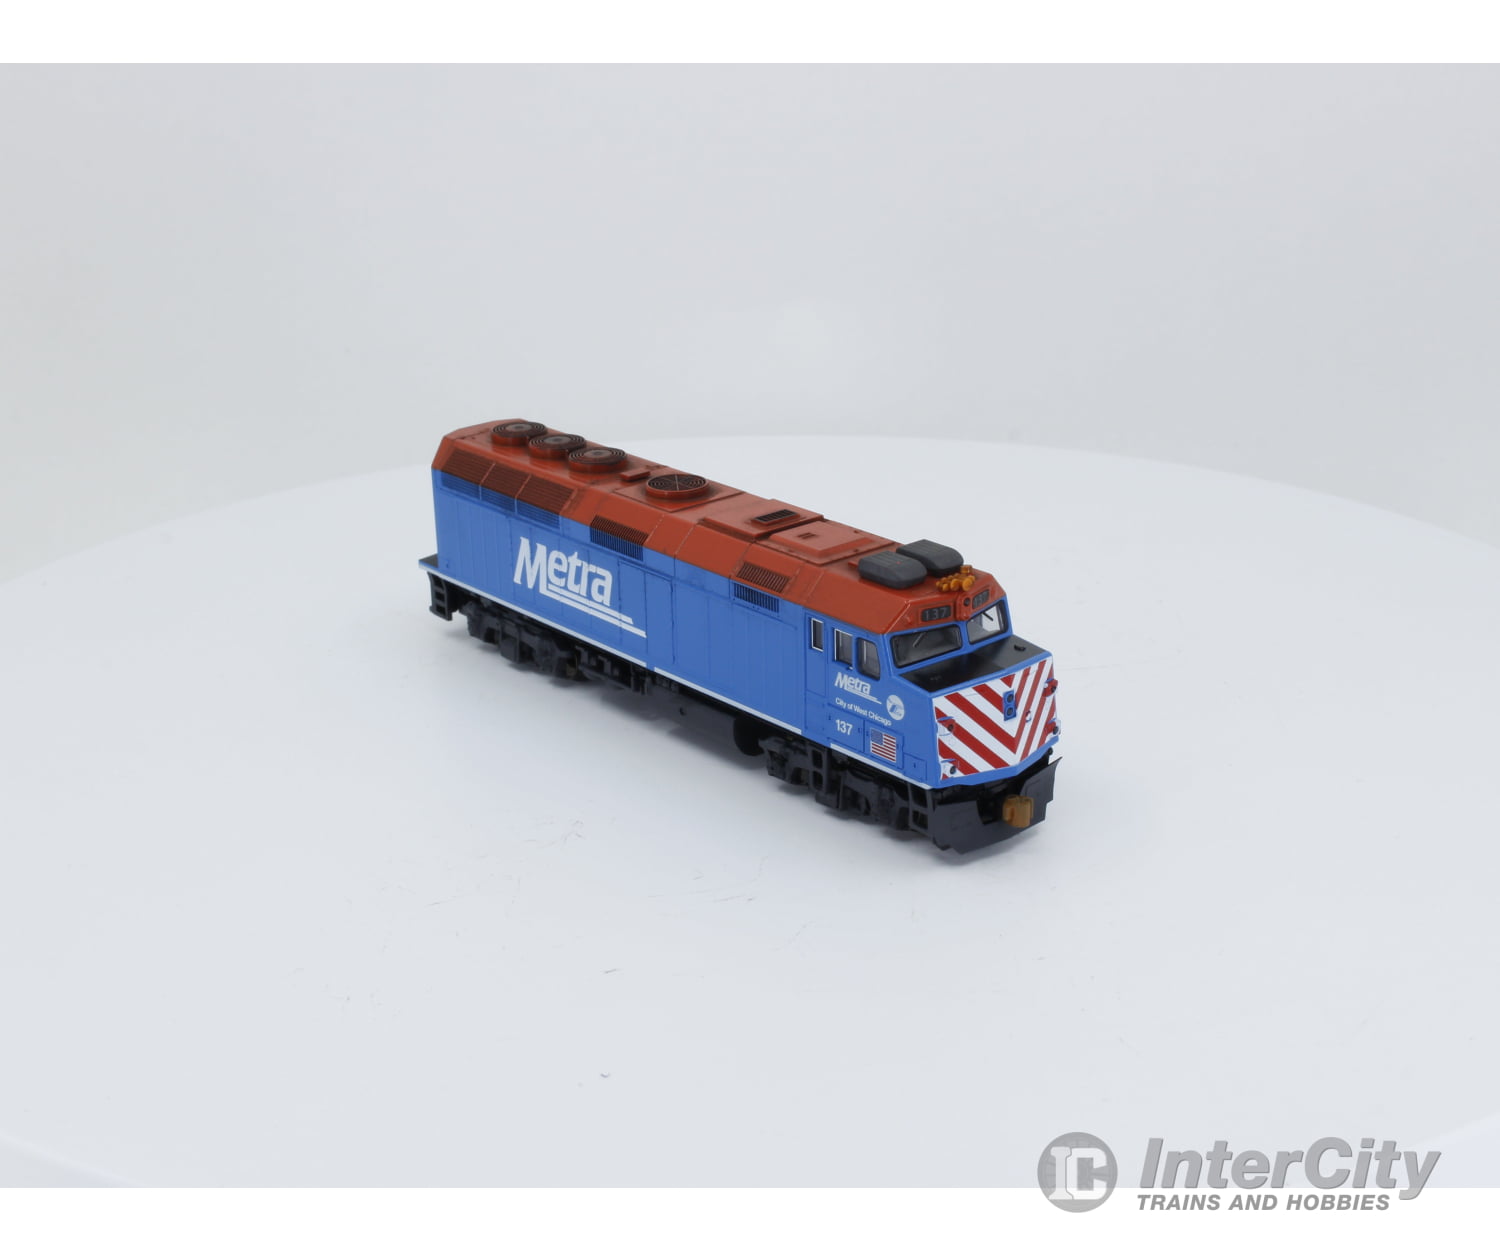 Kato 176-9101 N F40Ph Locomotive Chicago Metra (Metx) 137 Analog Dc Locomotives